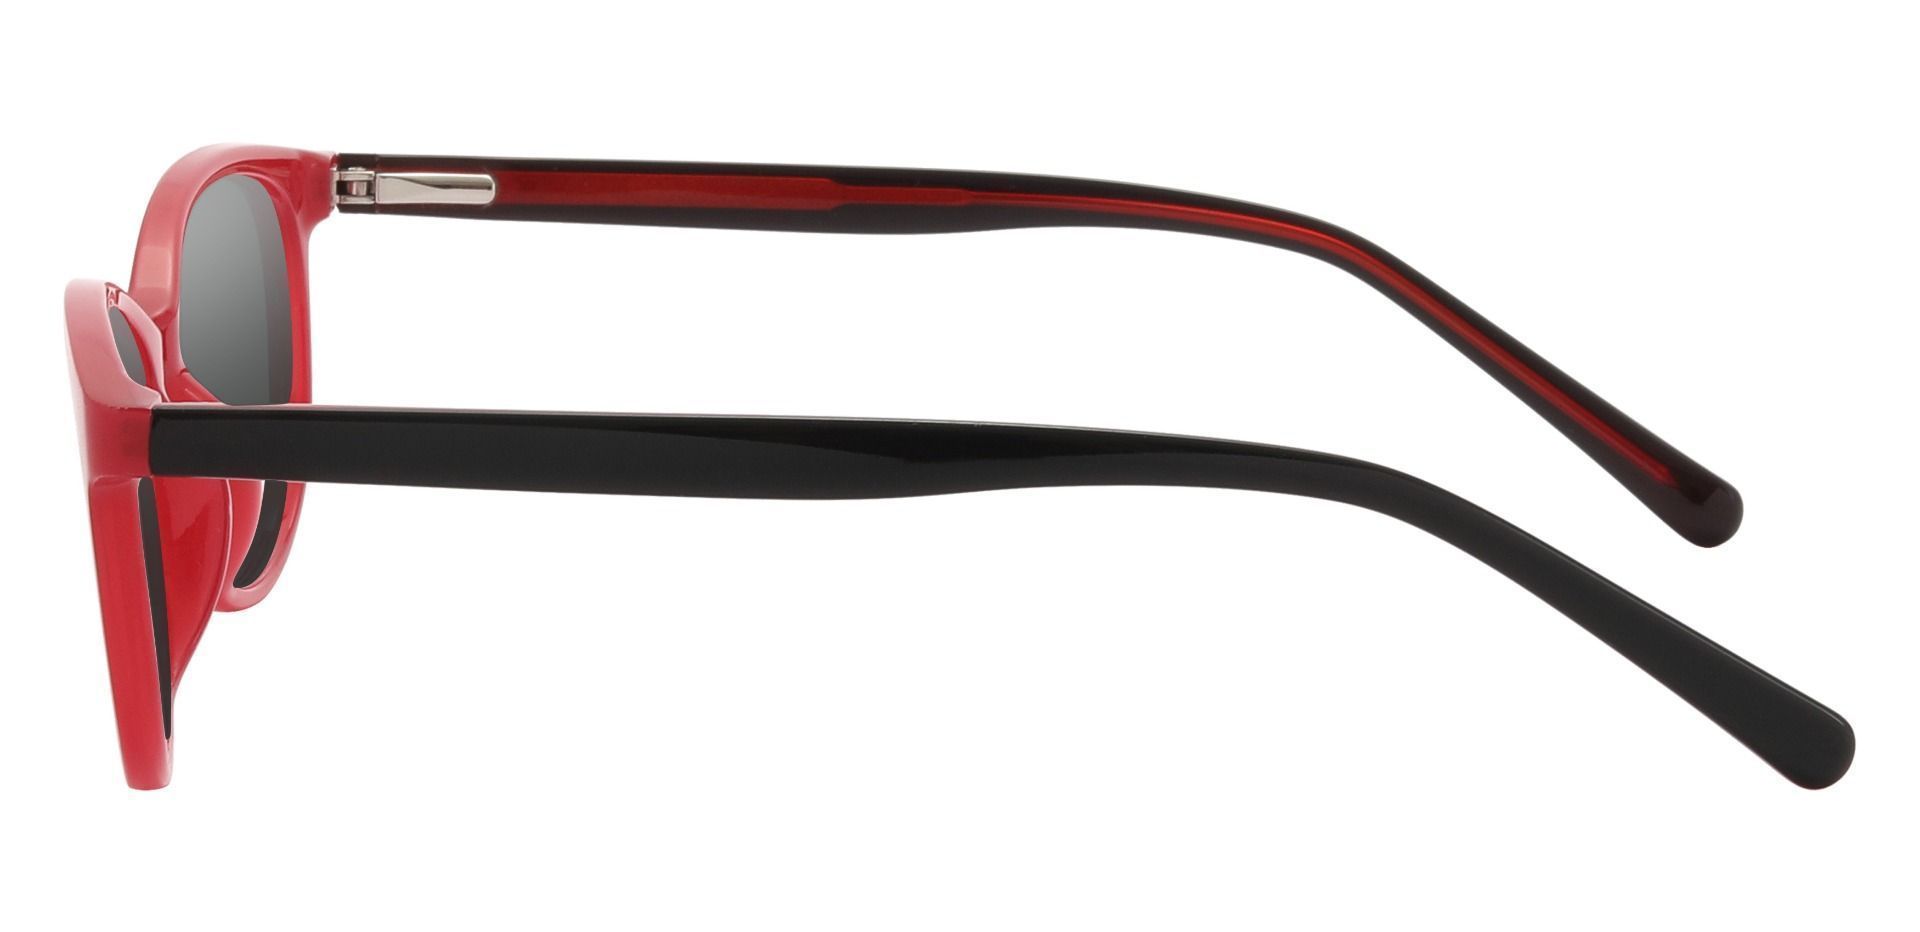 Adora Oval Prescription Sunglasses - Red Frame With Gray Lenses